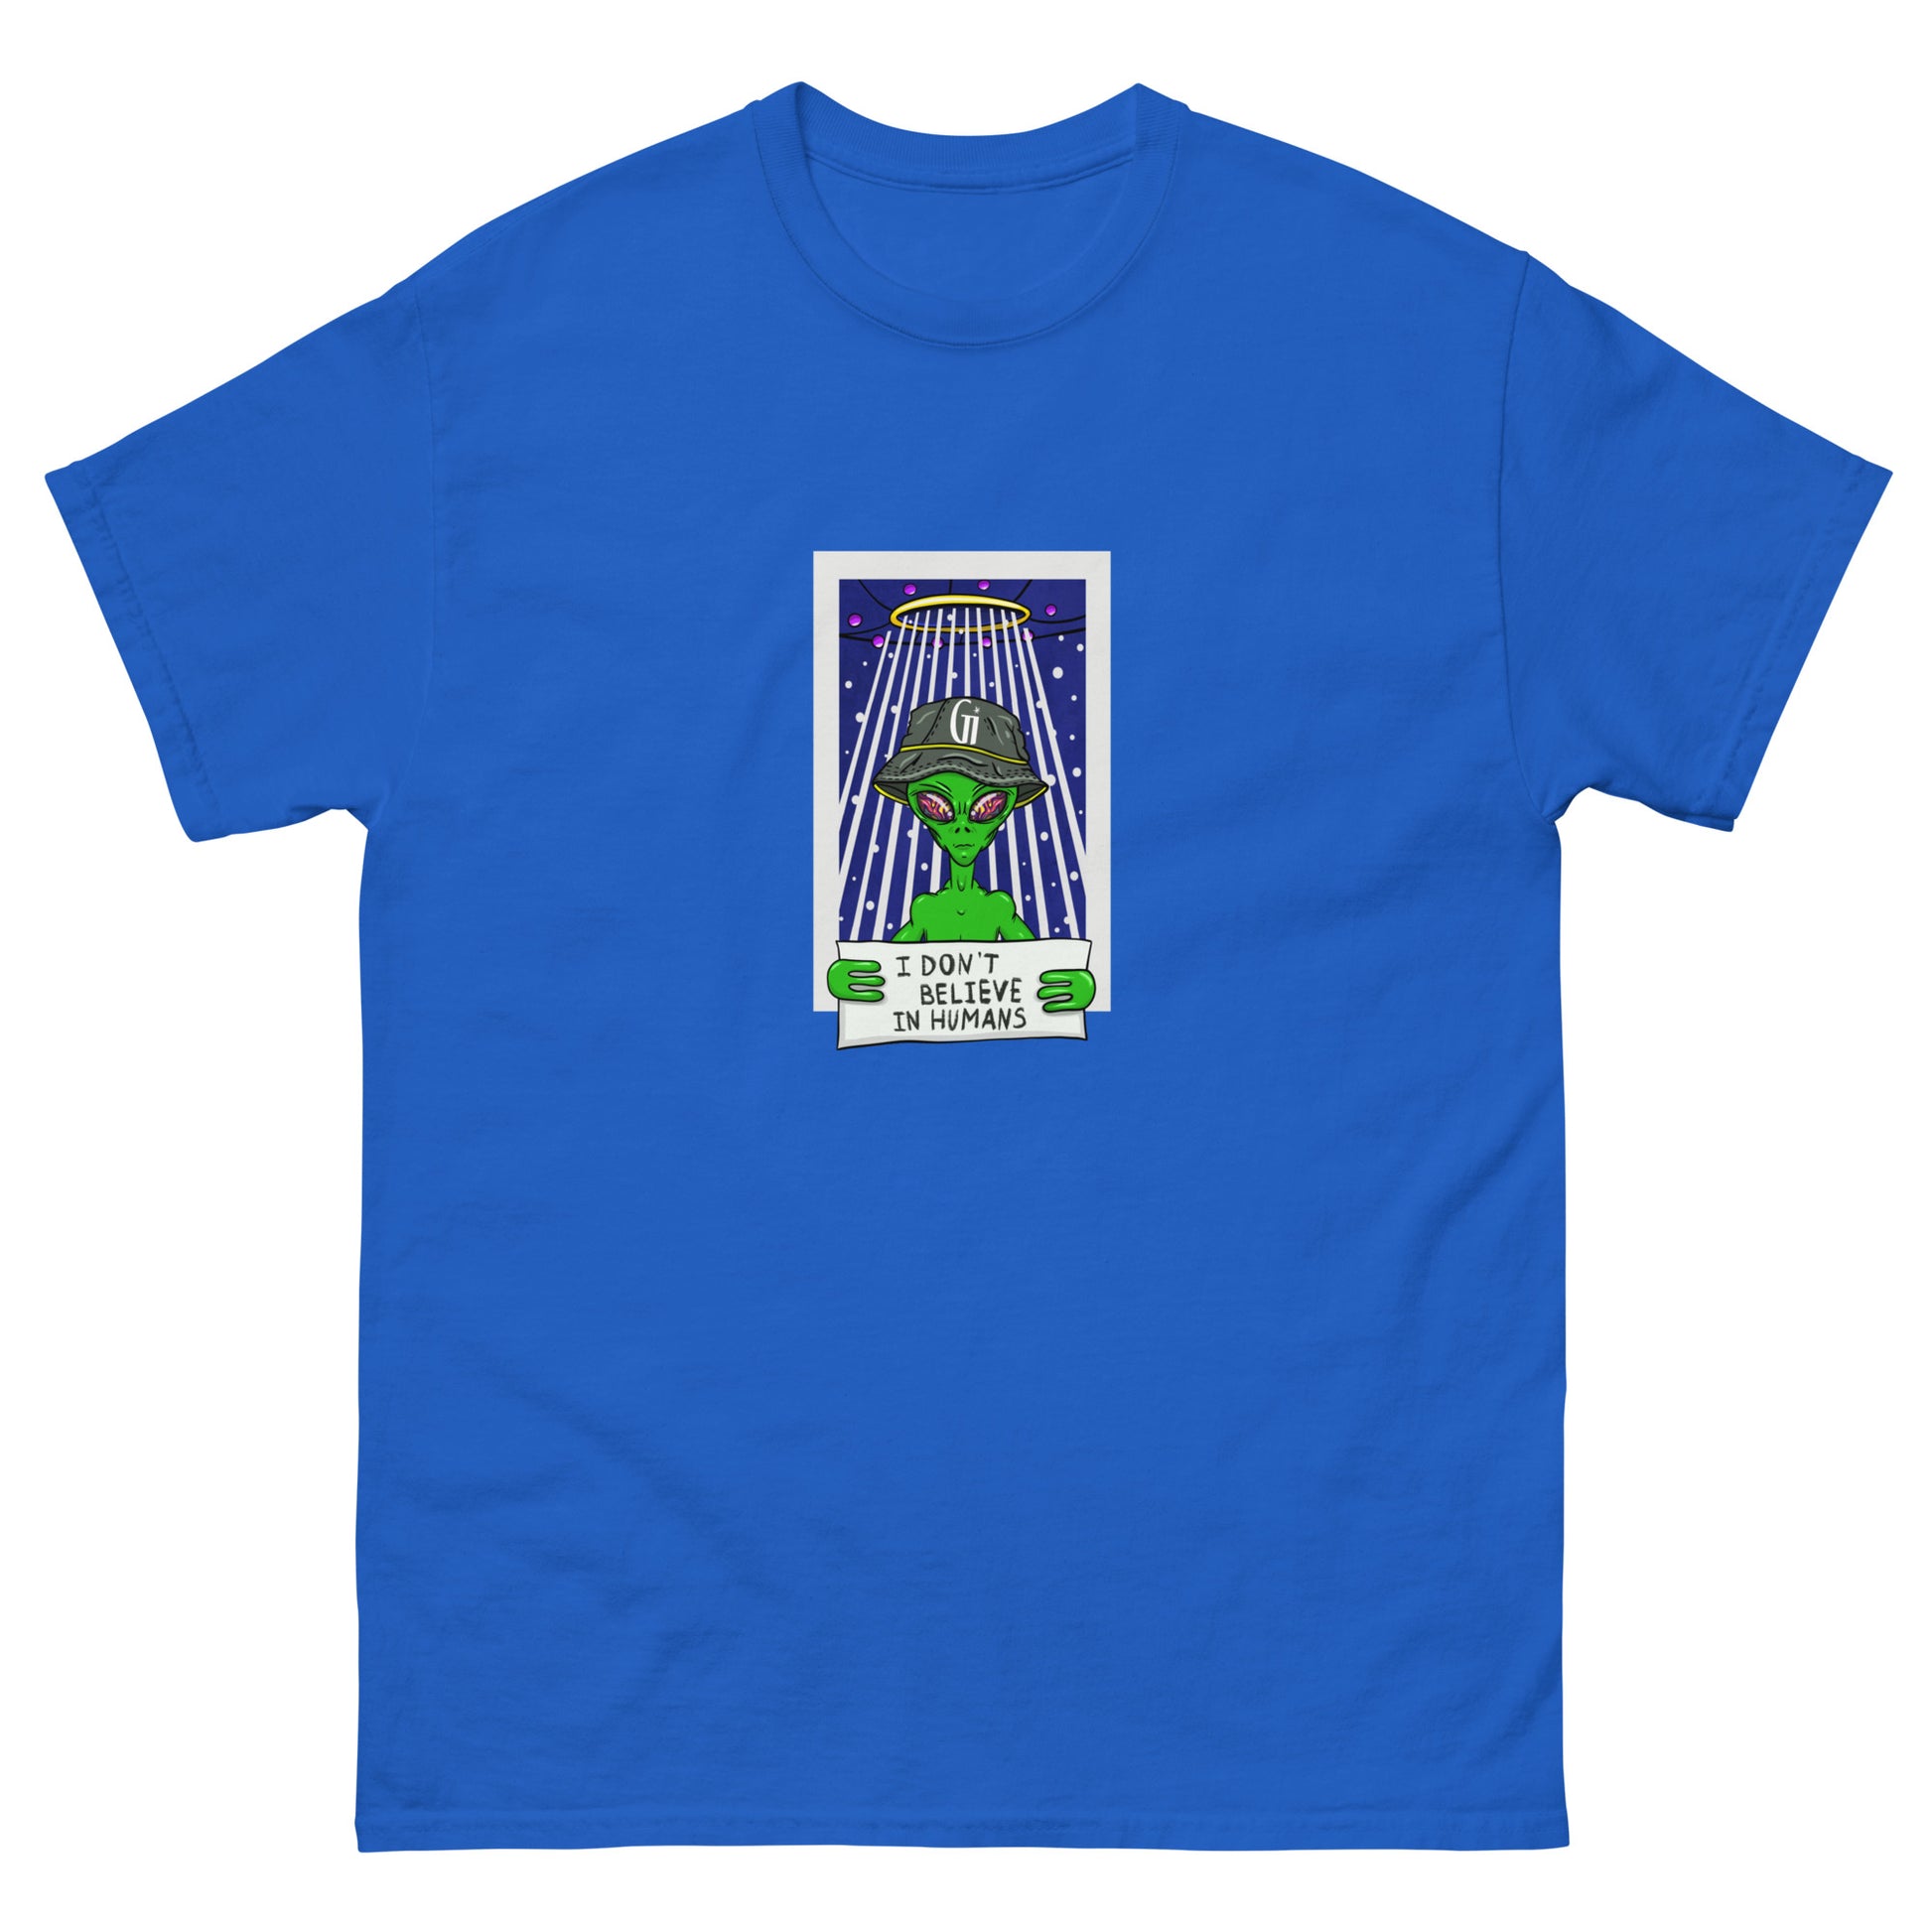 royal blue color cotton t shirt with stylish alien